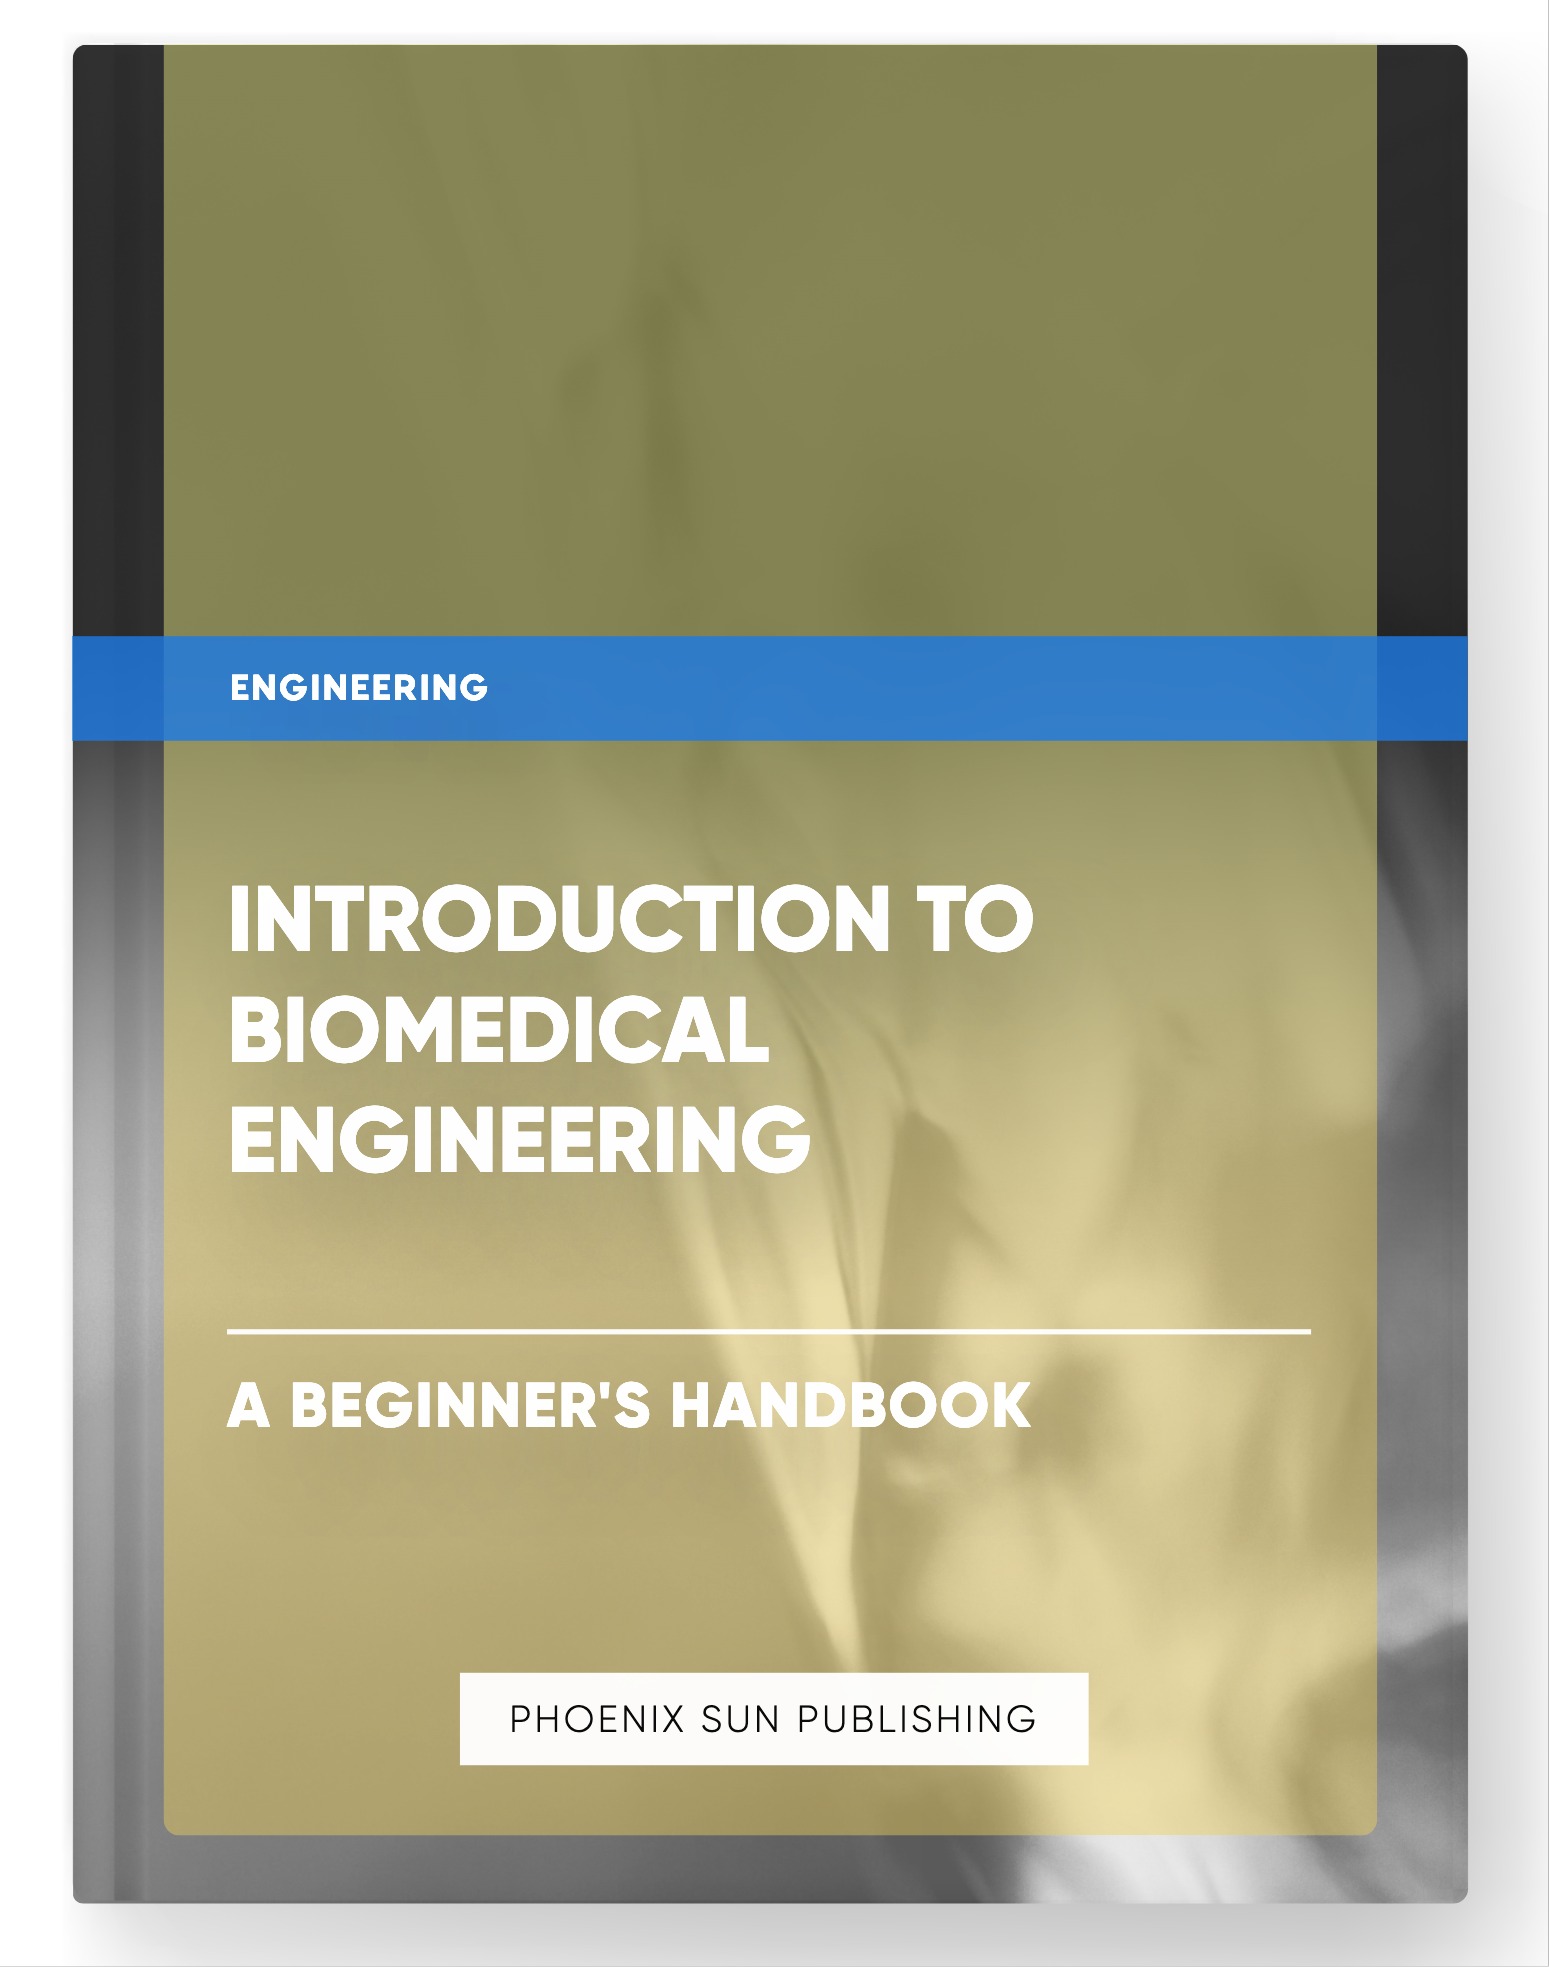 Introduction to Biomedical Engineering – A Beginner’s Handbook